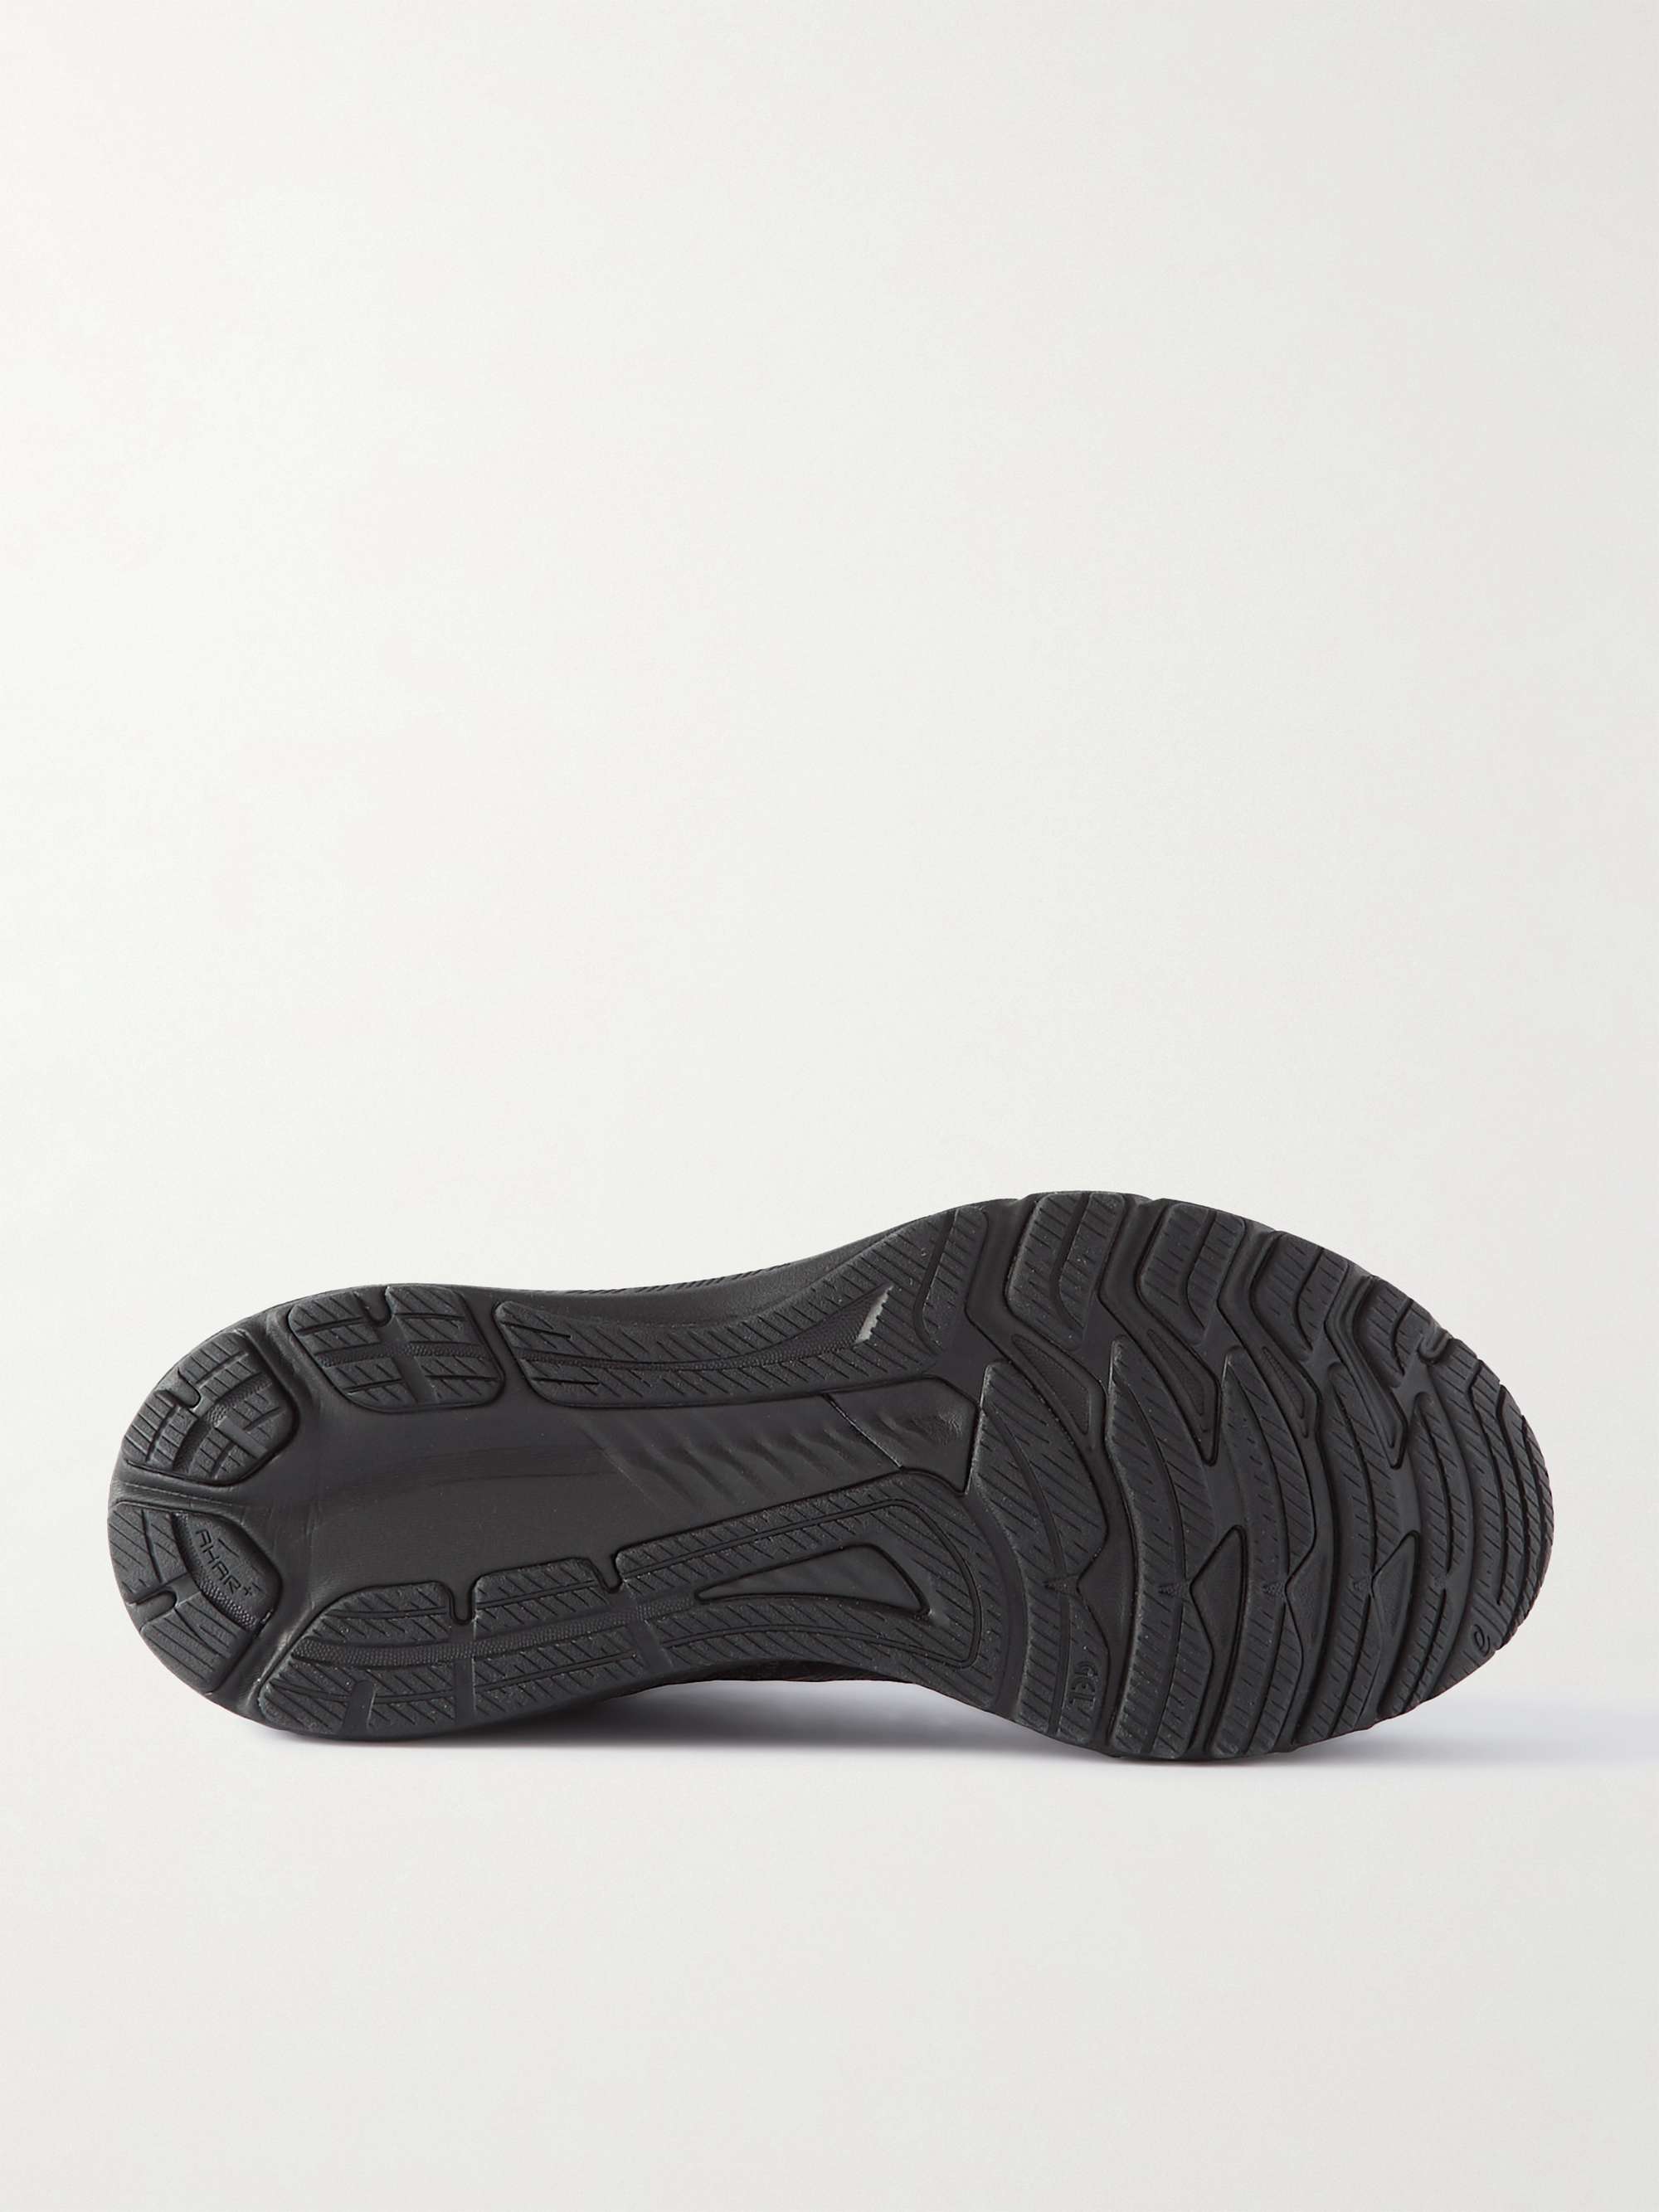 ASICS GT-2000 10 Rubber-Trimmed Mesh Running Shoes